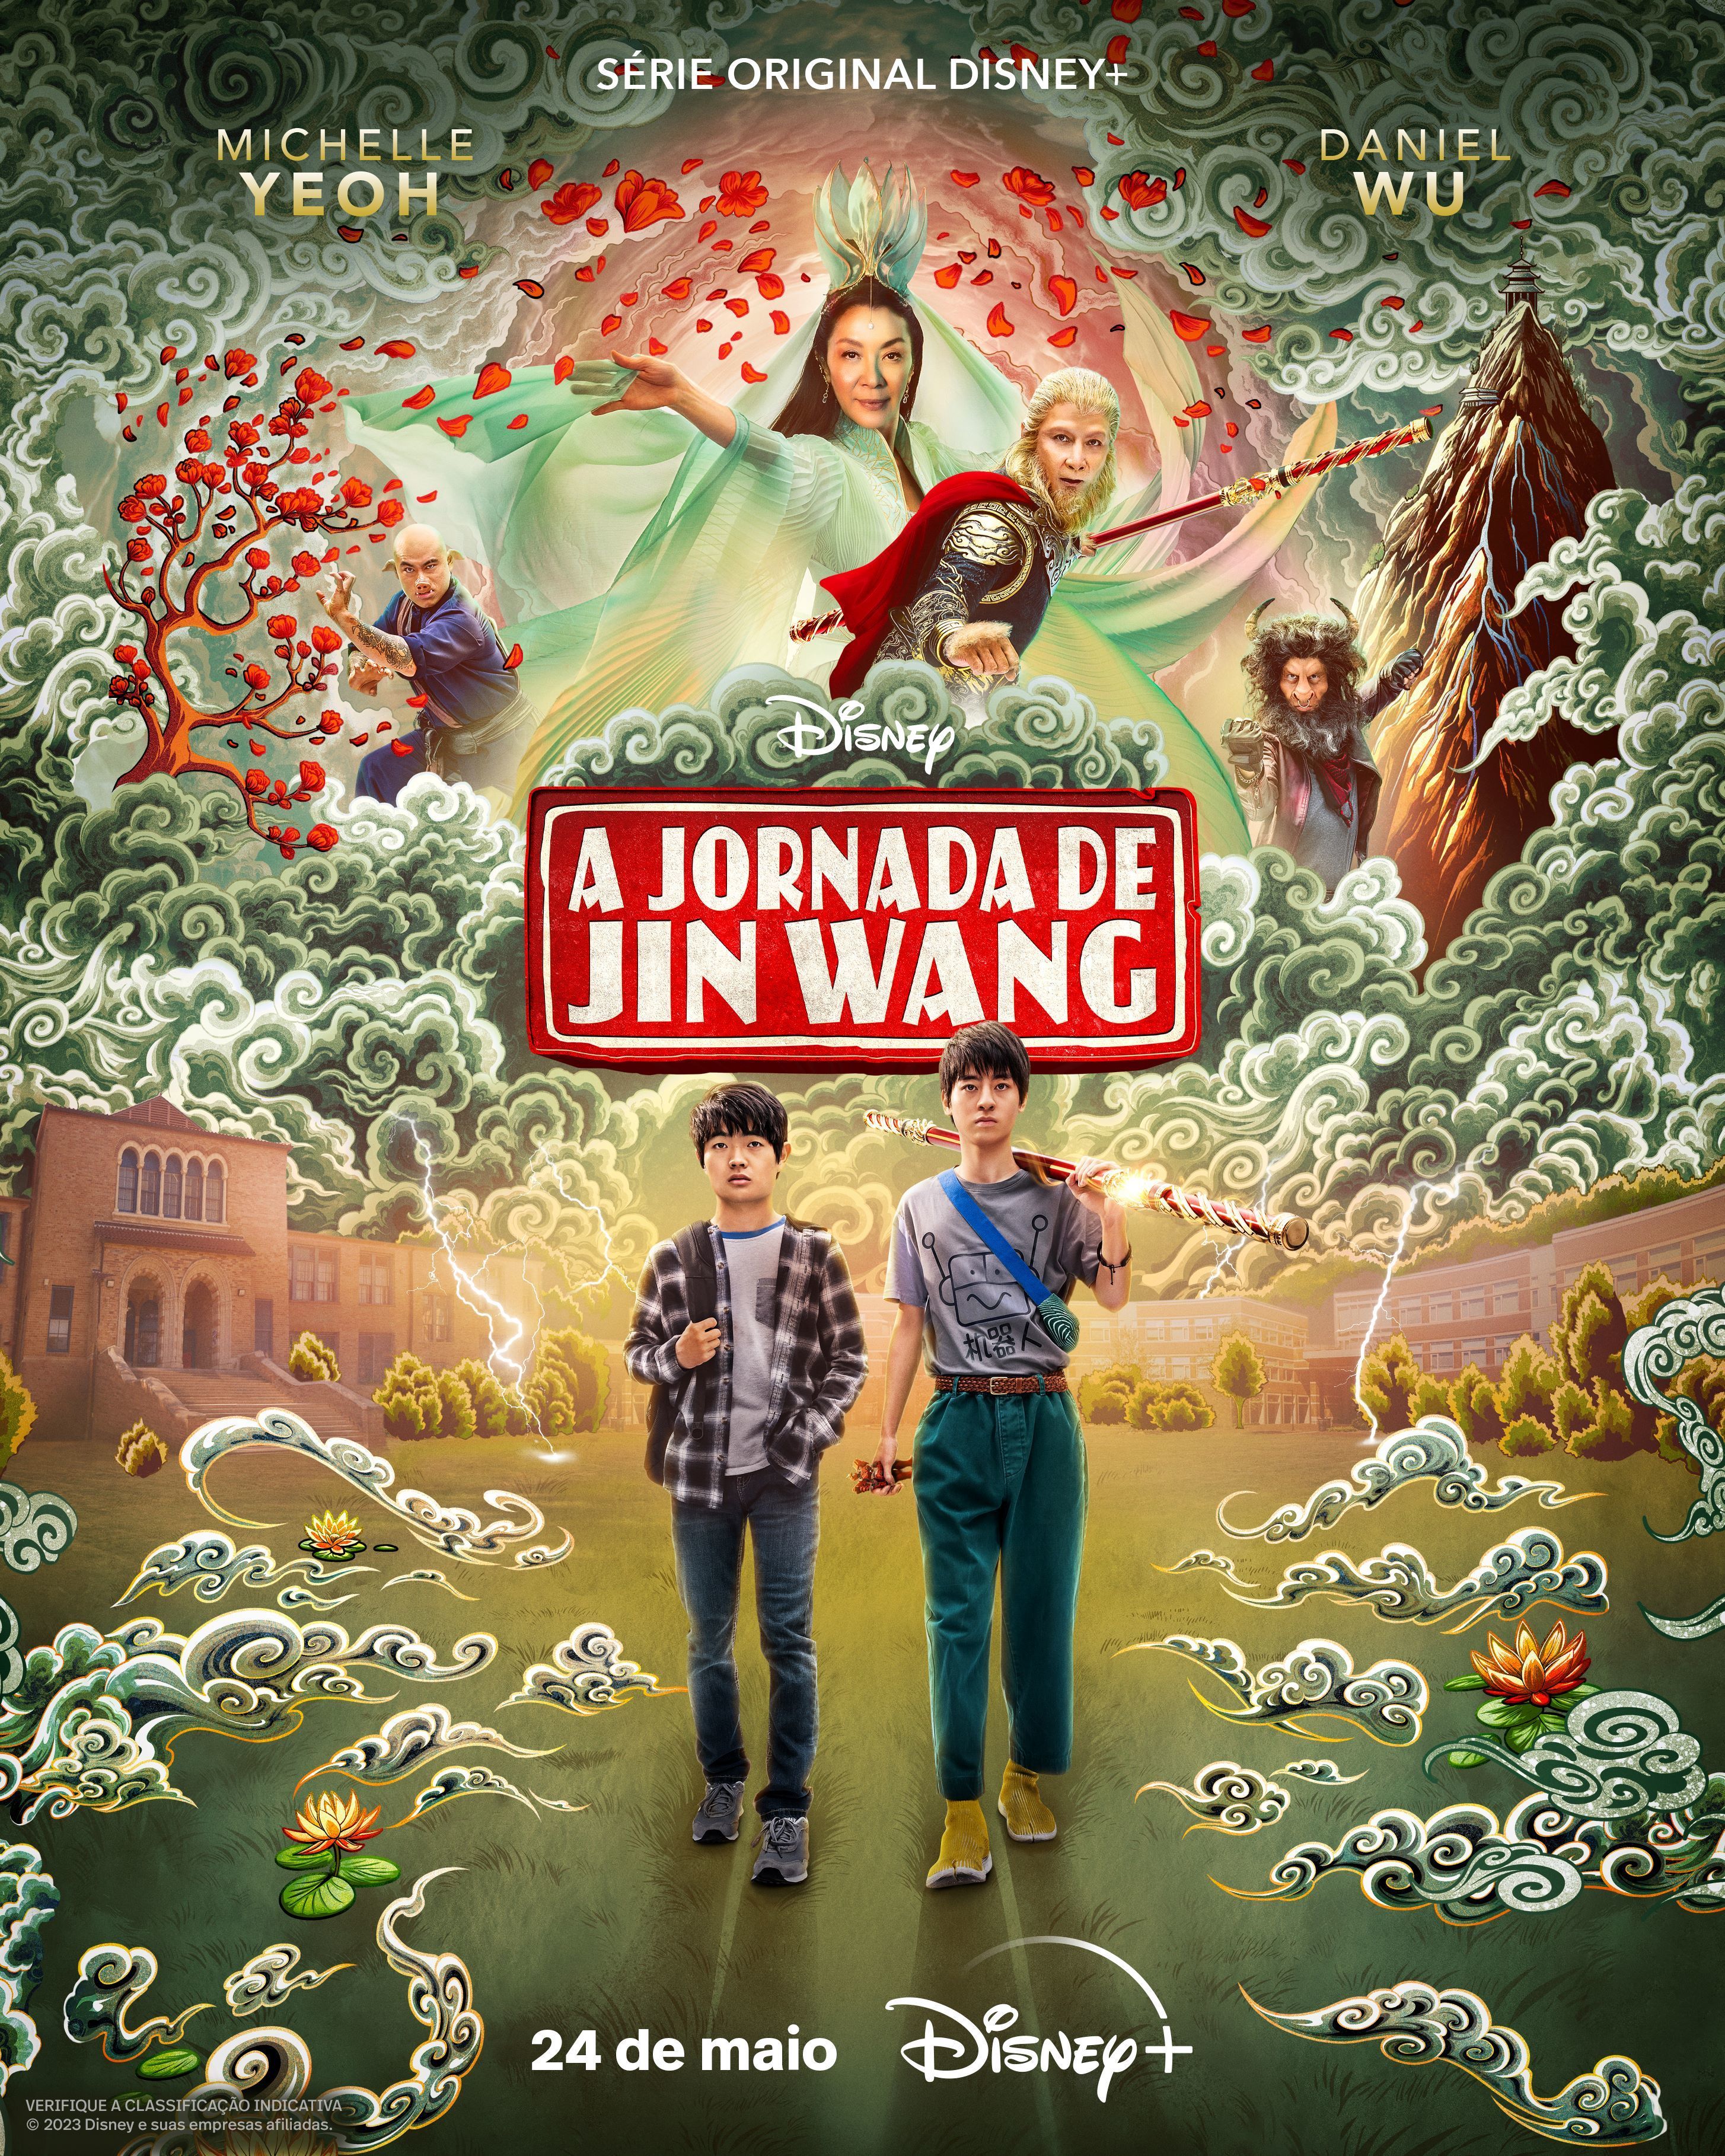 A Jornada de Jin Wang